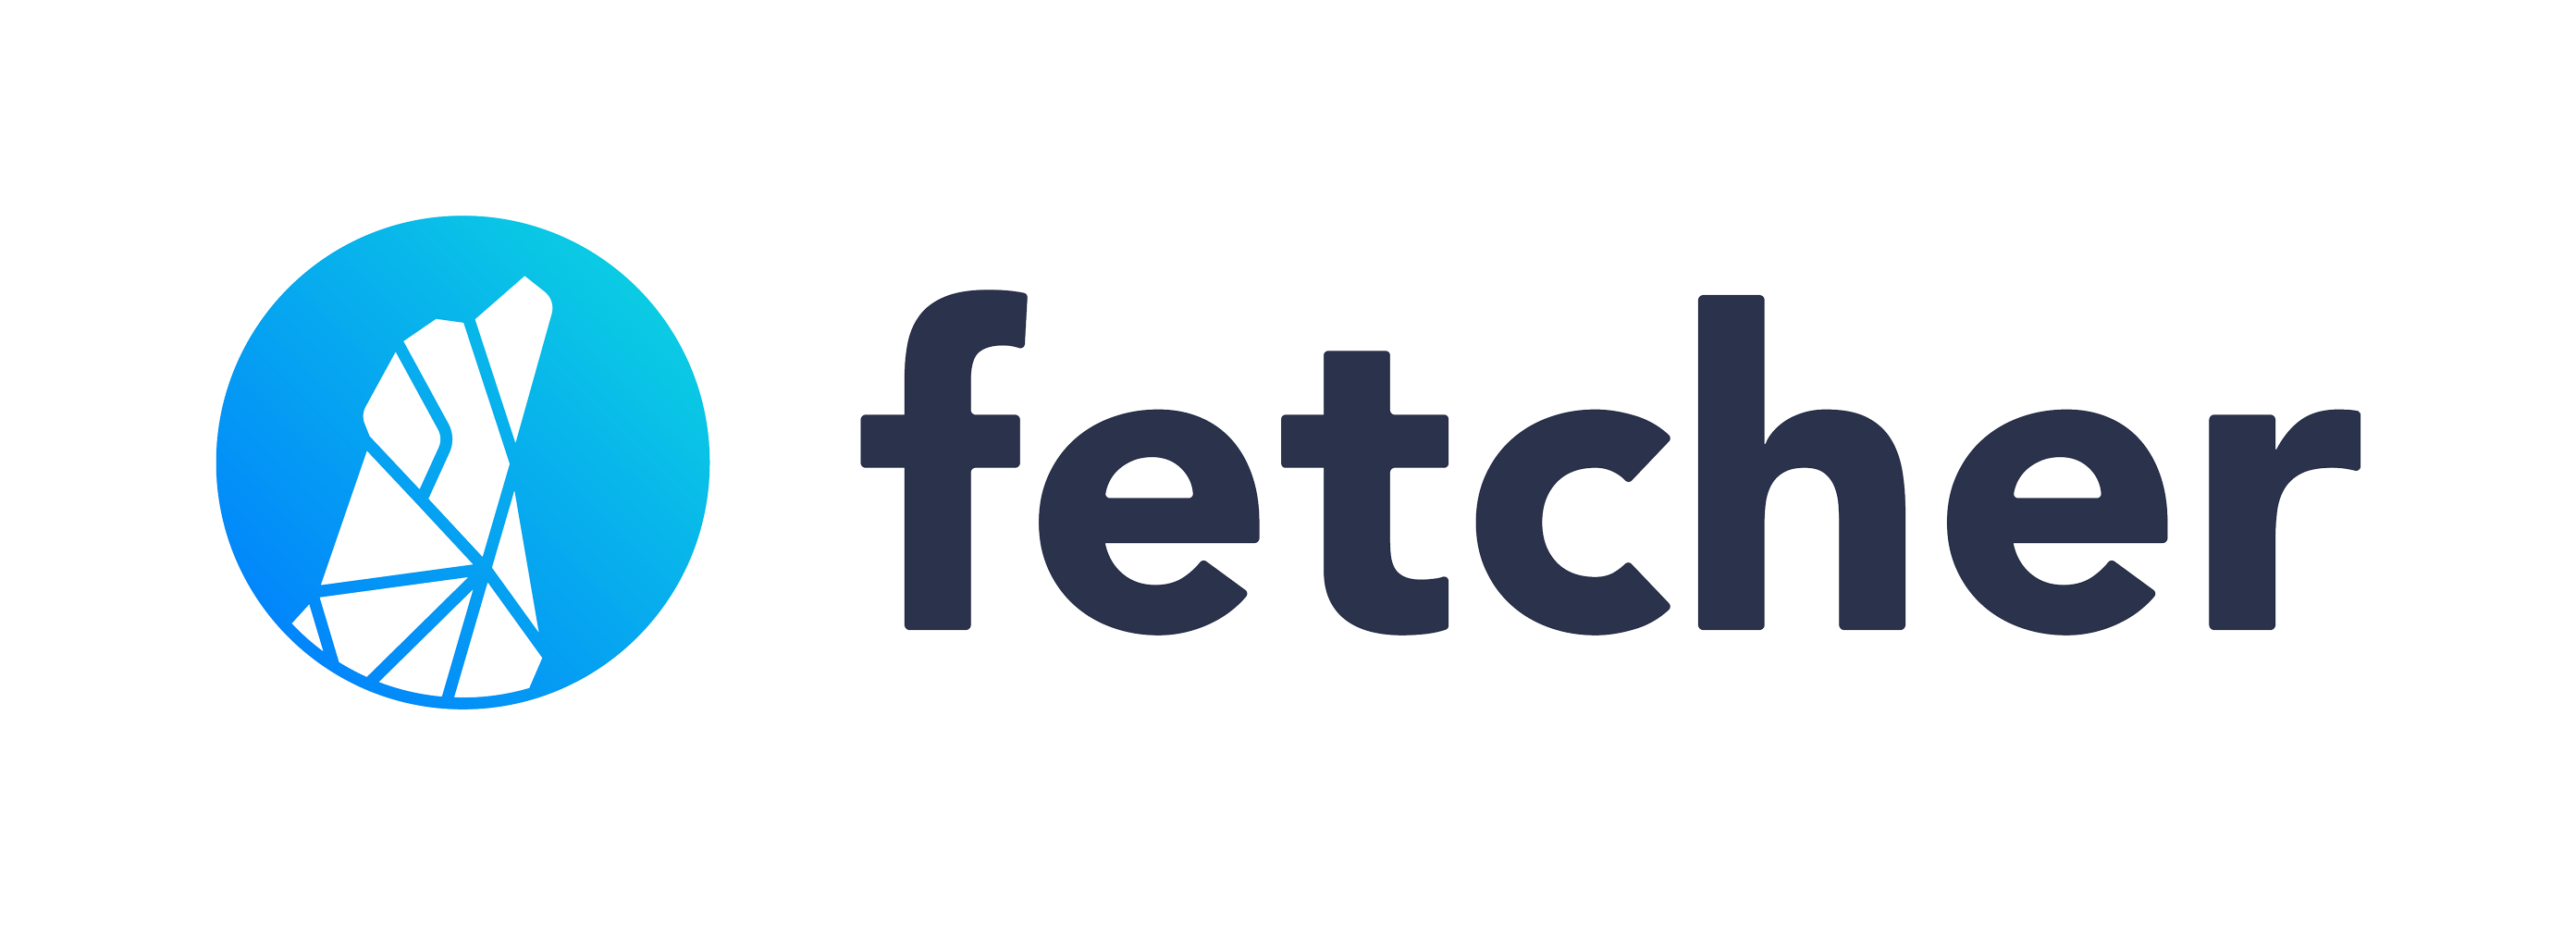 fetcher-logo_primary_color.png